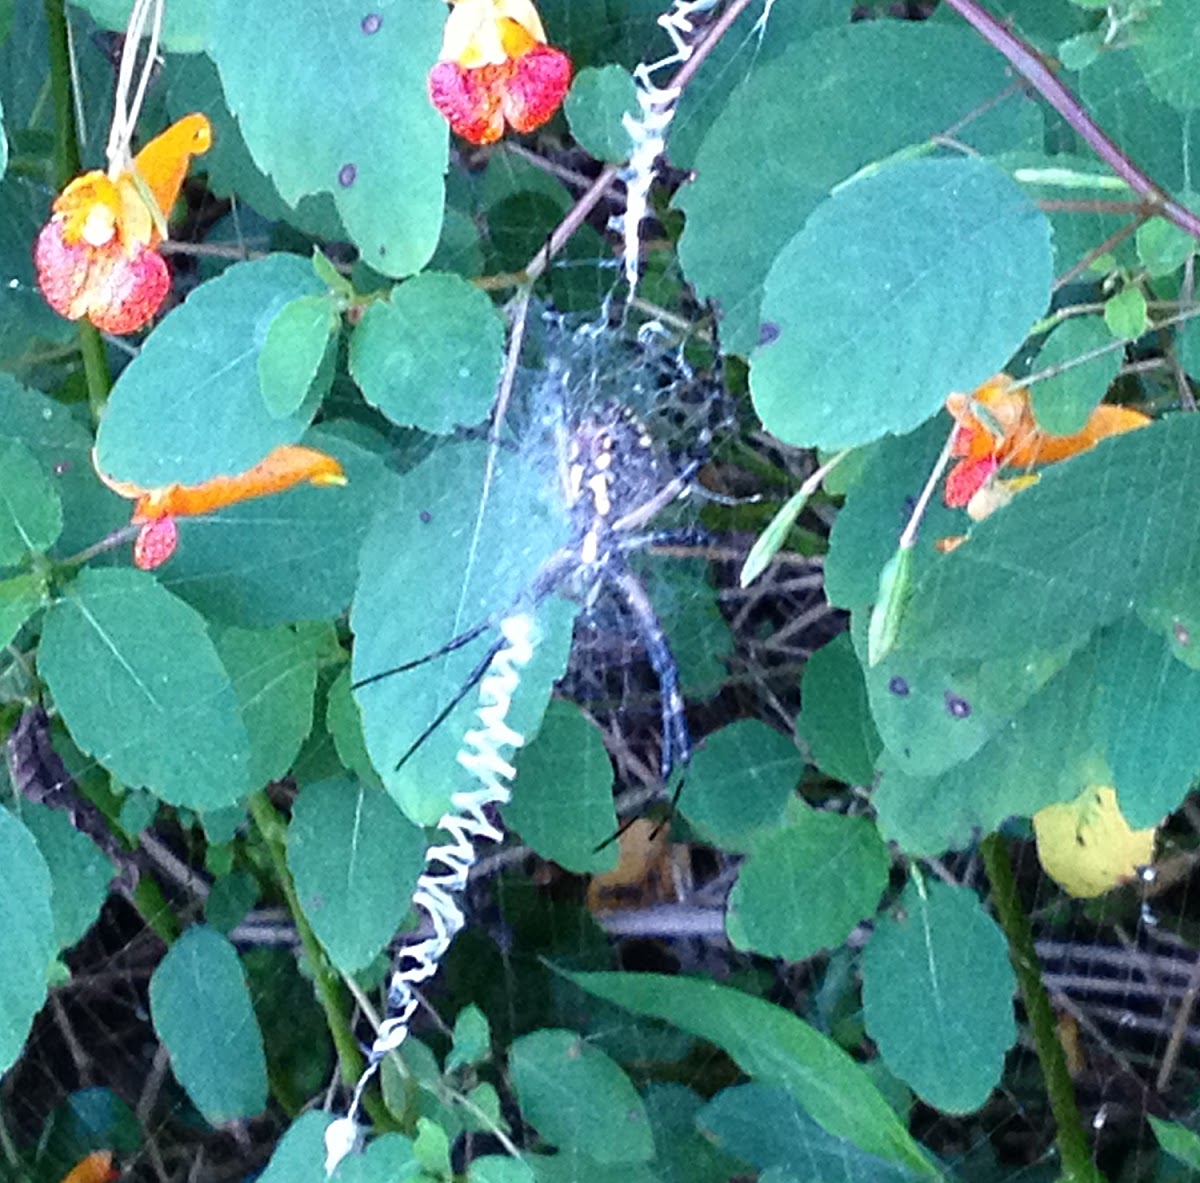 Black and Yellow Garden Spider, Writing Spider or Corn Spider